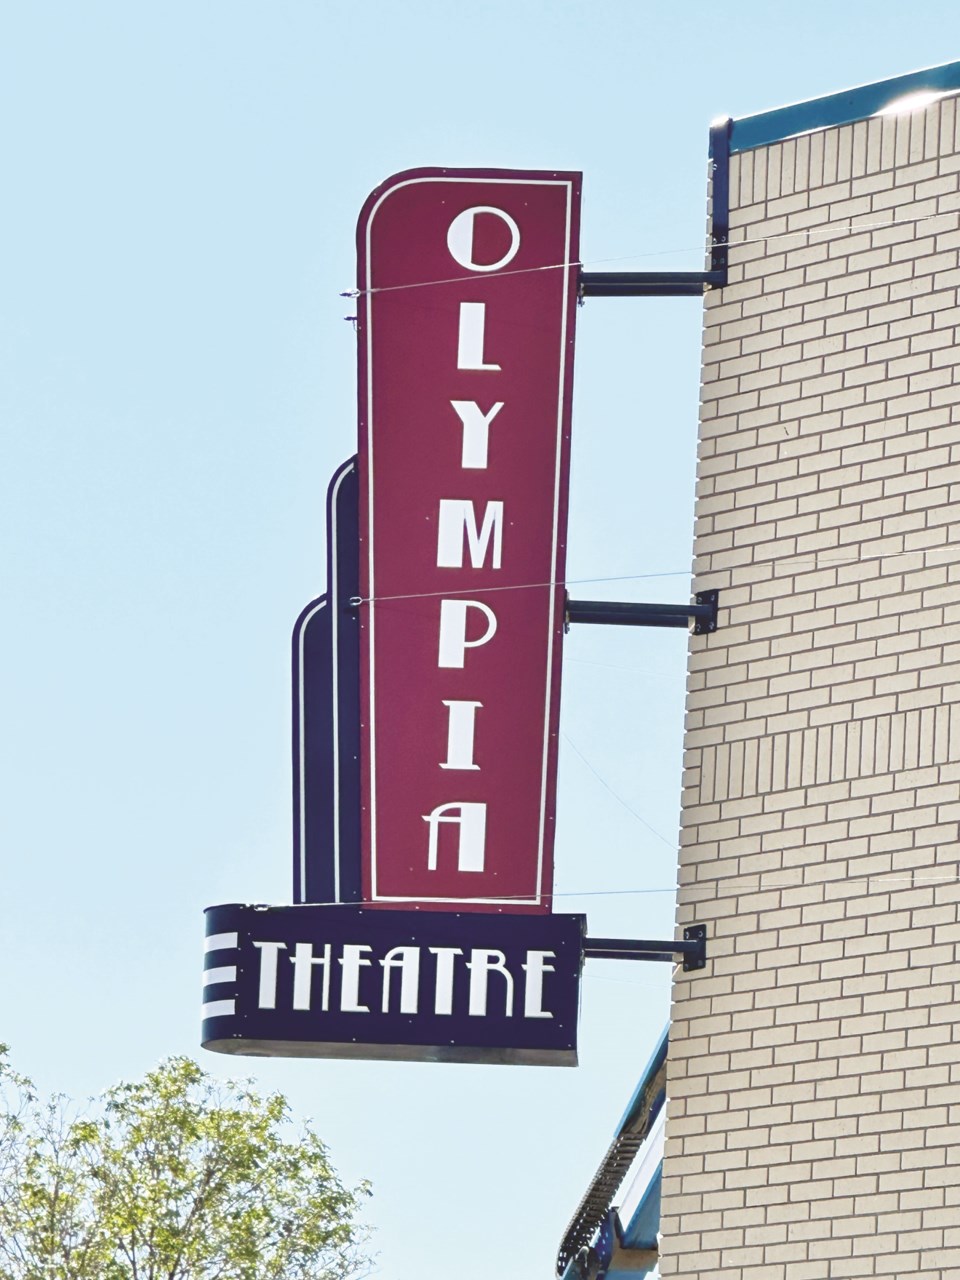 outdoor-theatre-sign